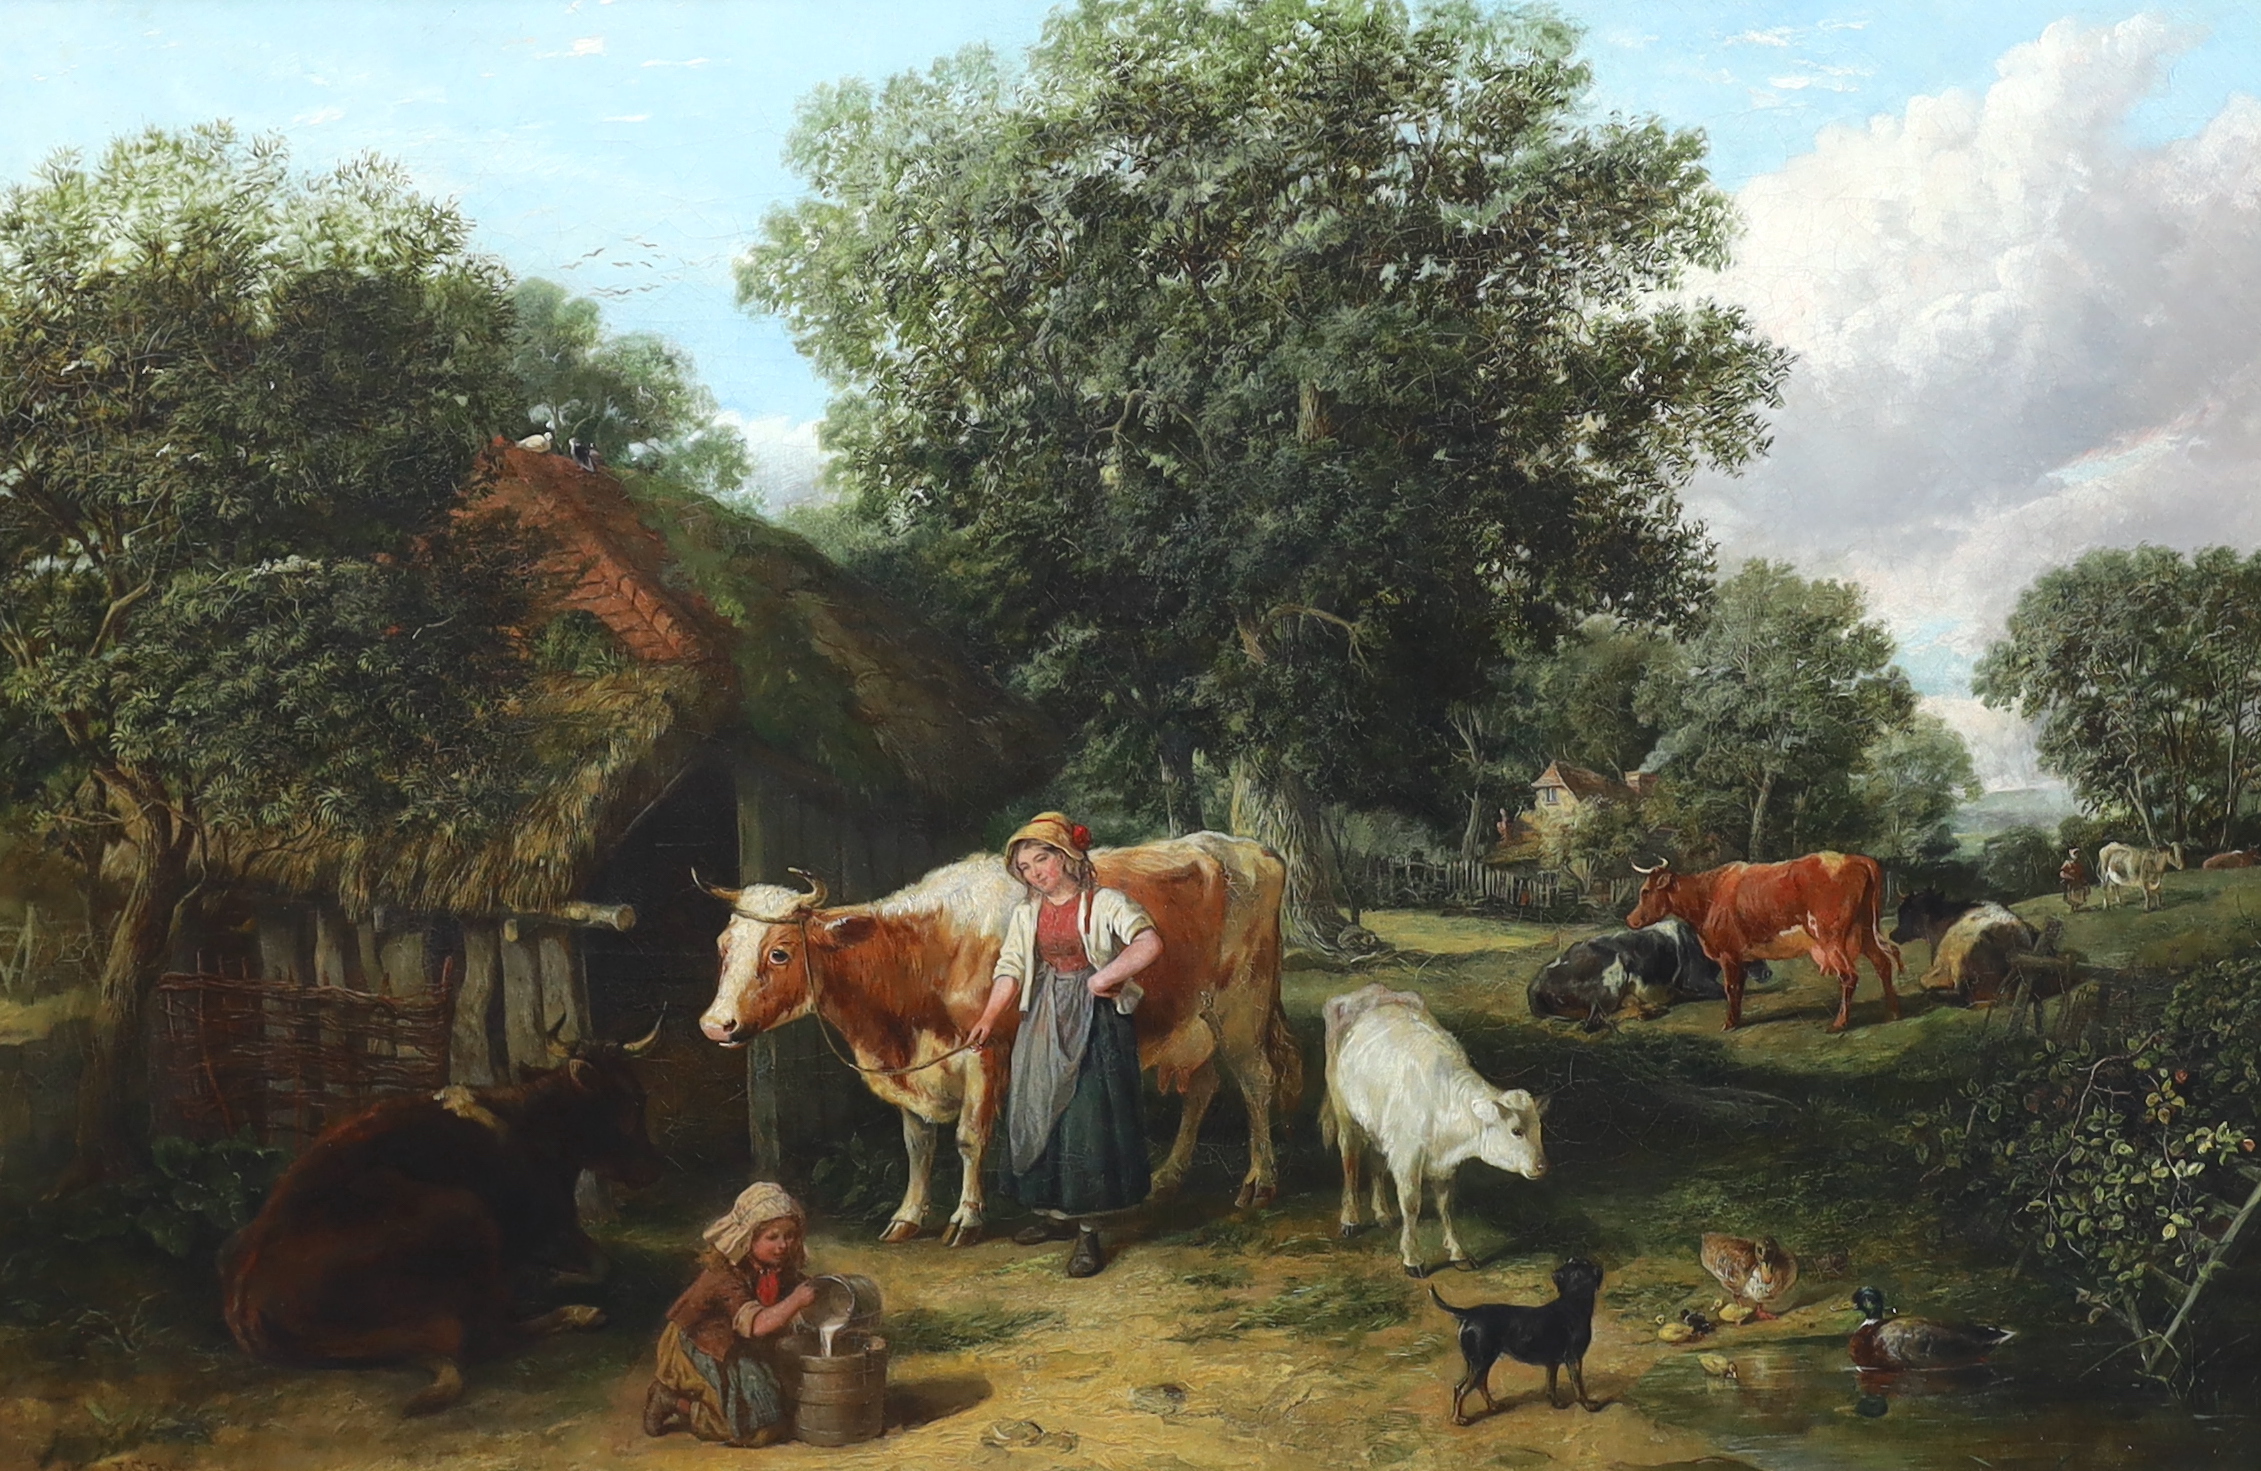 Arthur James Stark (English, 1831-1902), Farm scene with figures and oxen, oil on canvas, 59 x 90cm